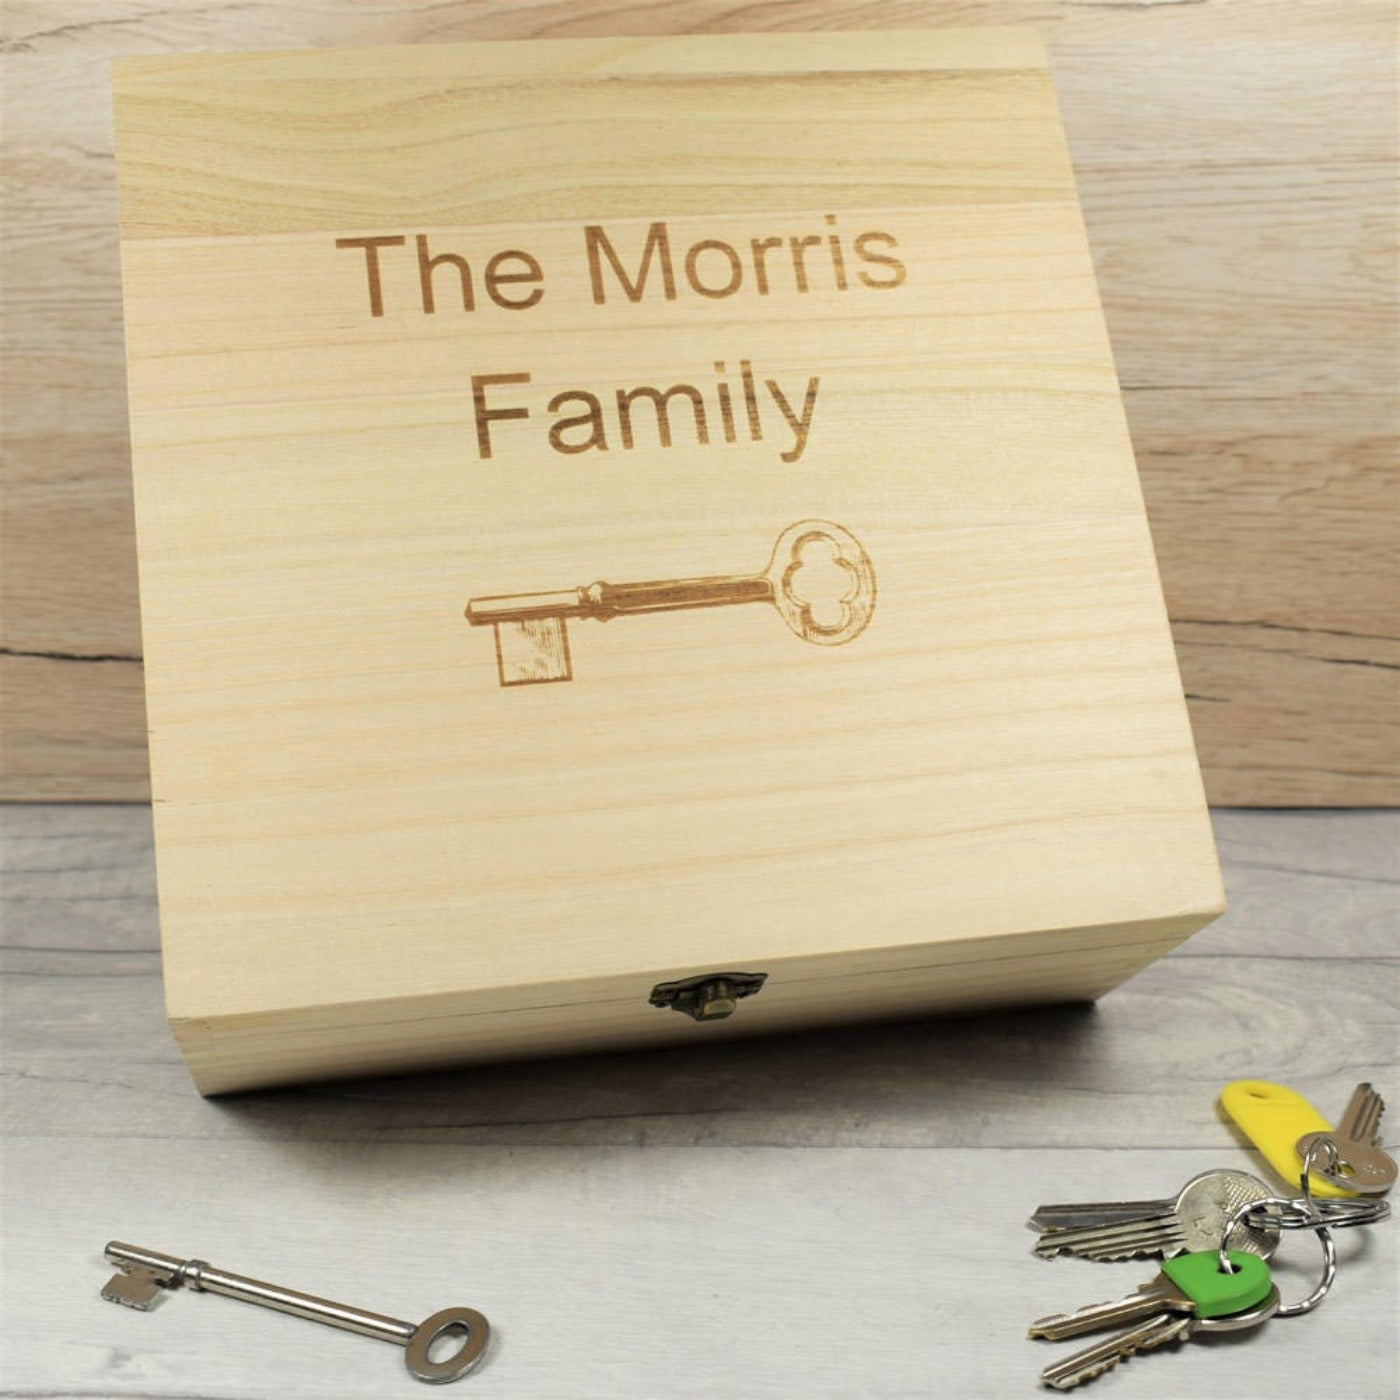 Personalised, Engraved Wooden Key Box - Family Key Box